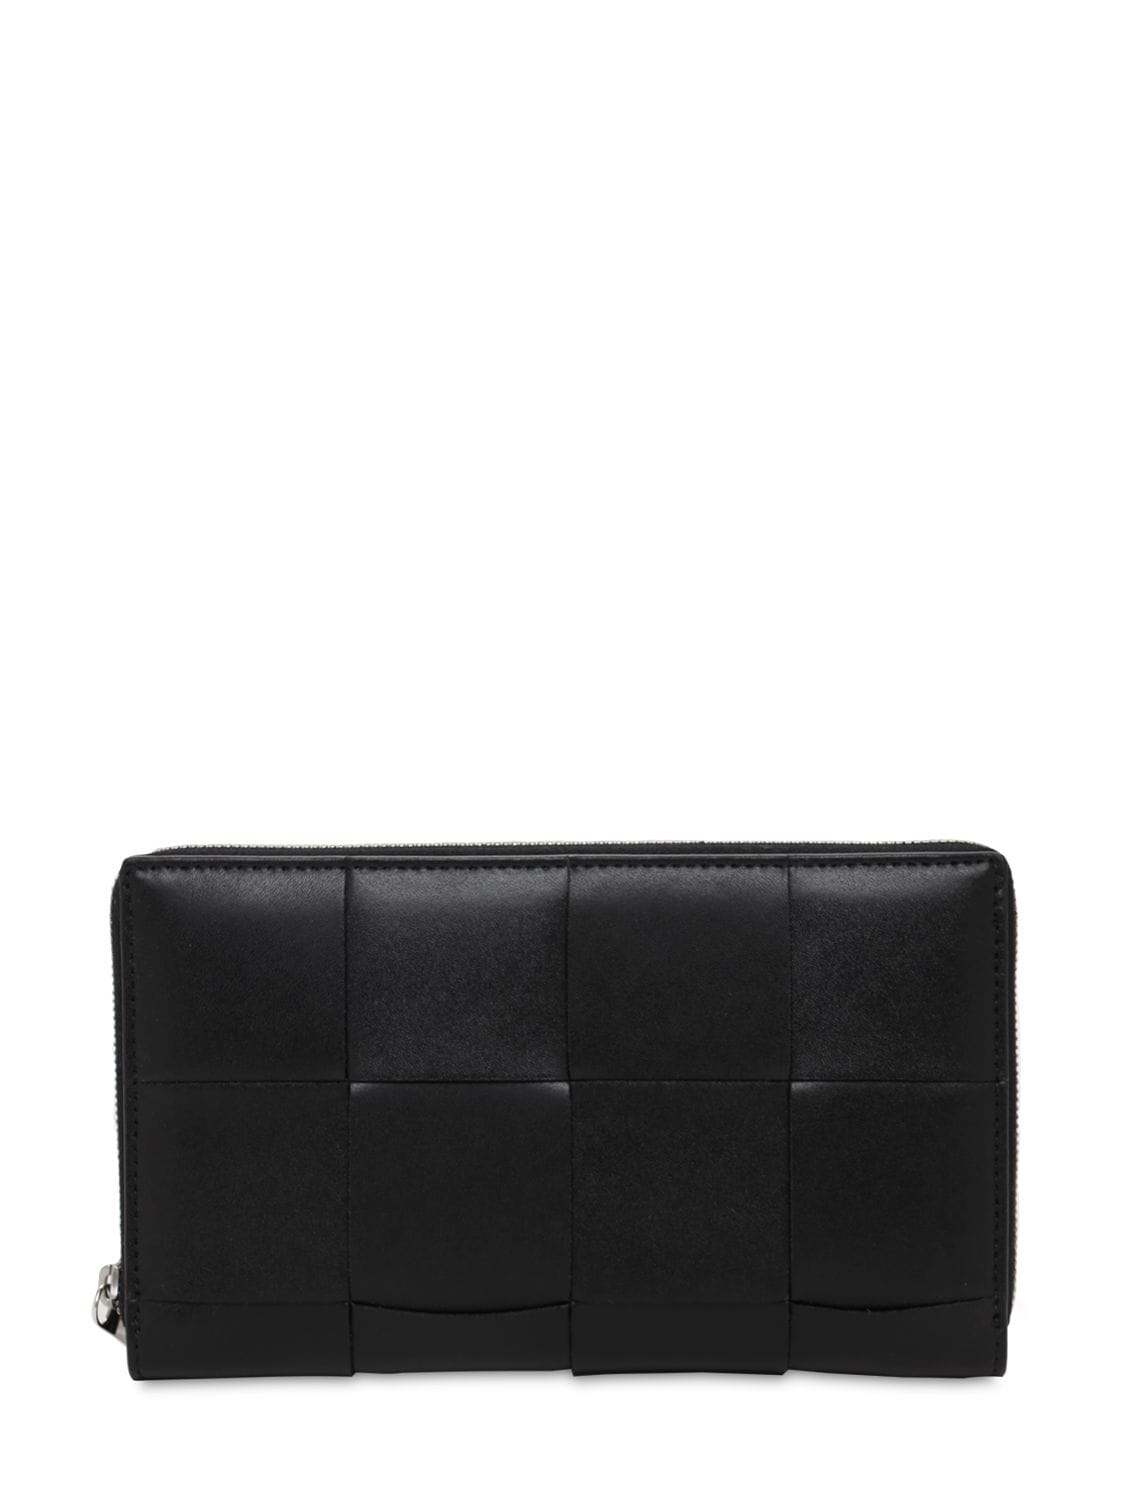 BOTTEGA VENETA Maxi Intreccio Leather Zip Around Wallet